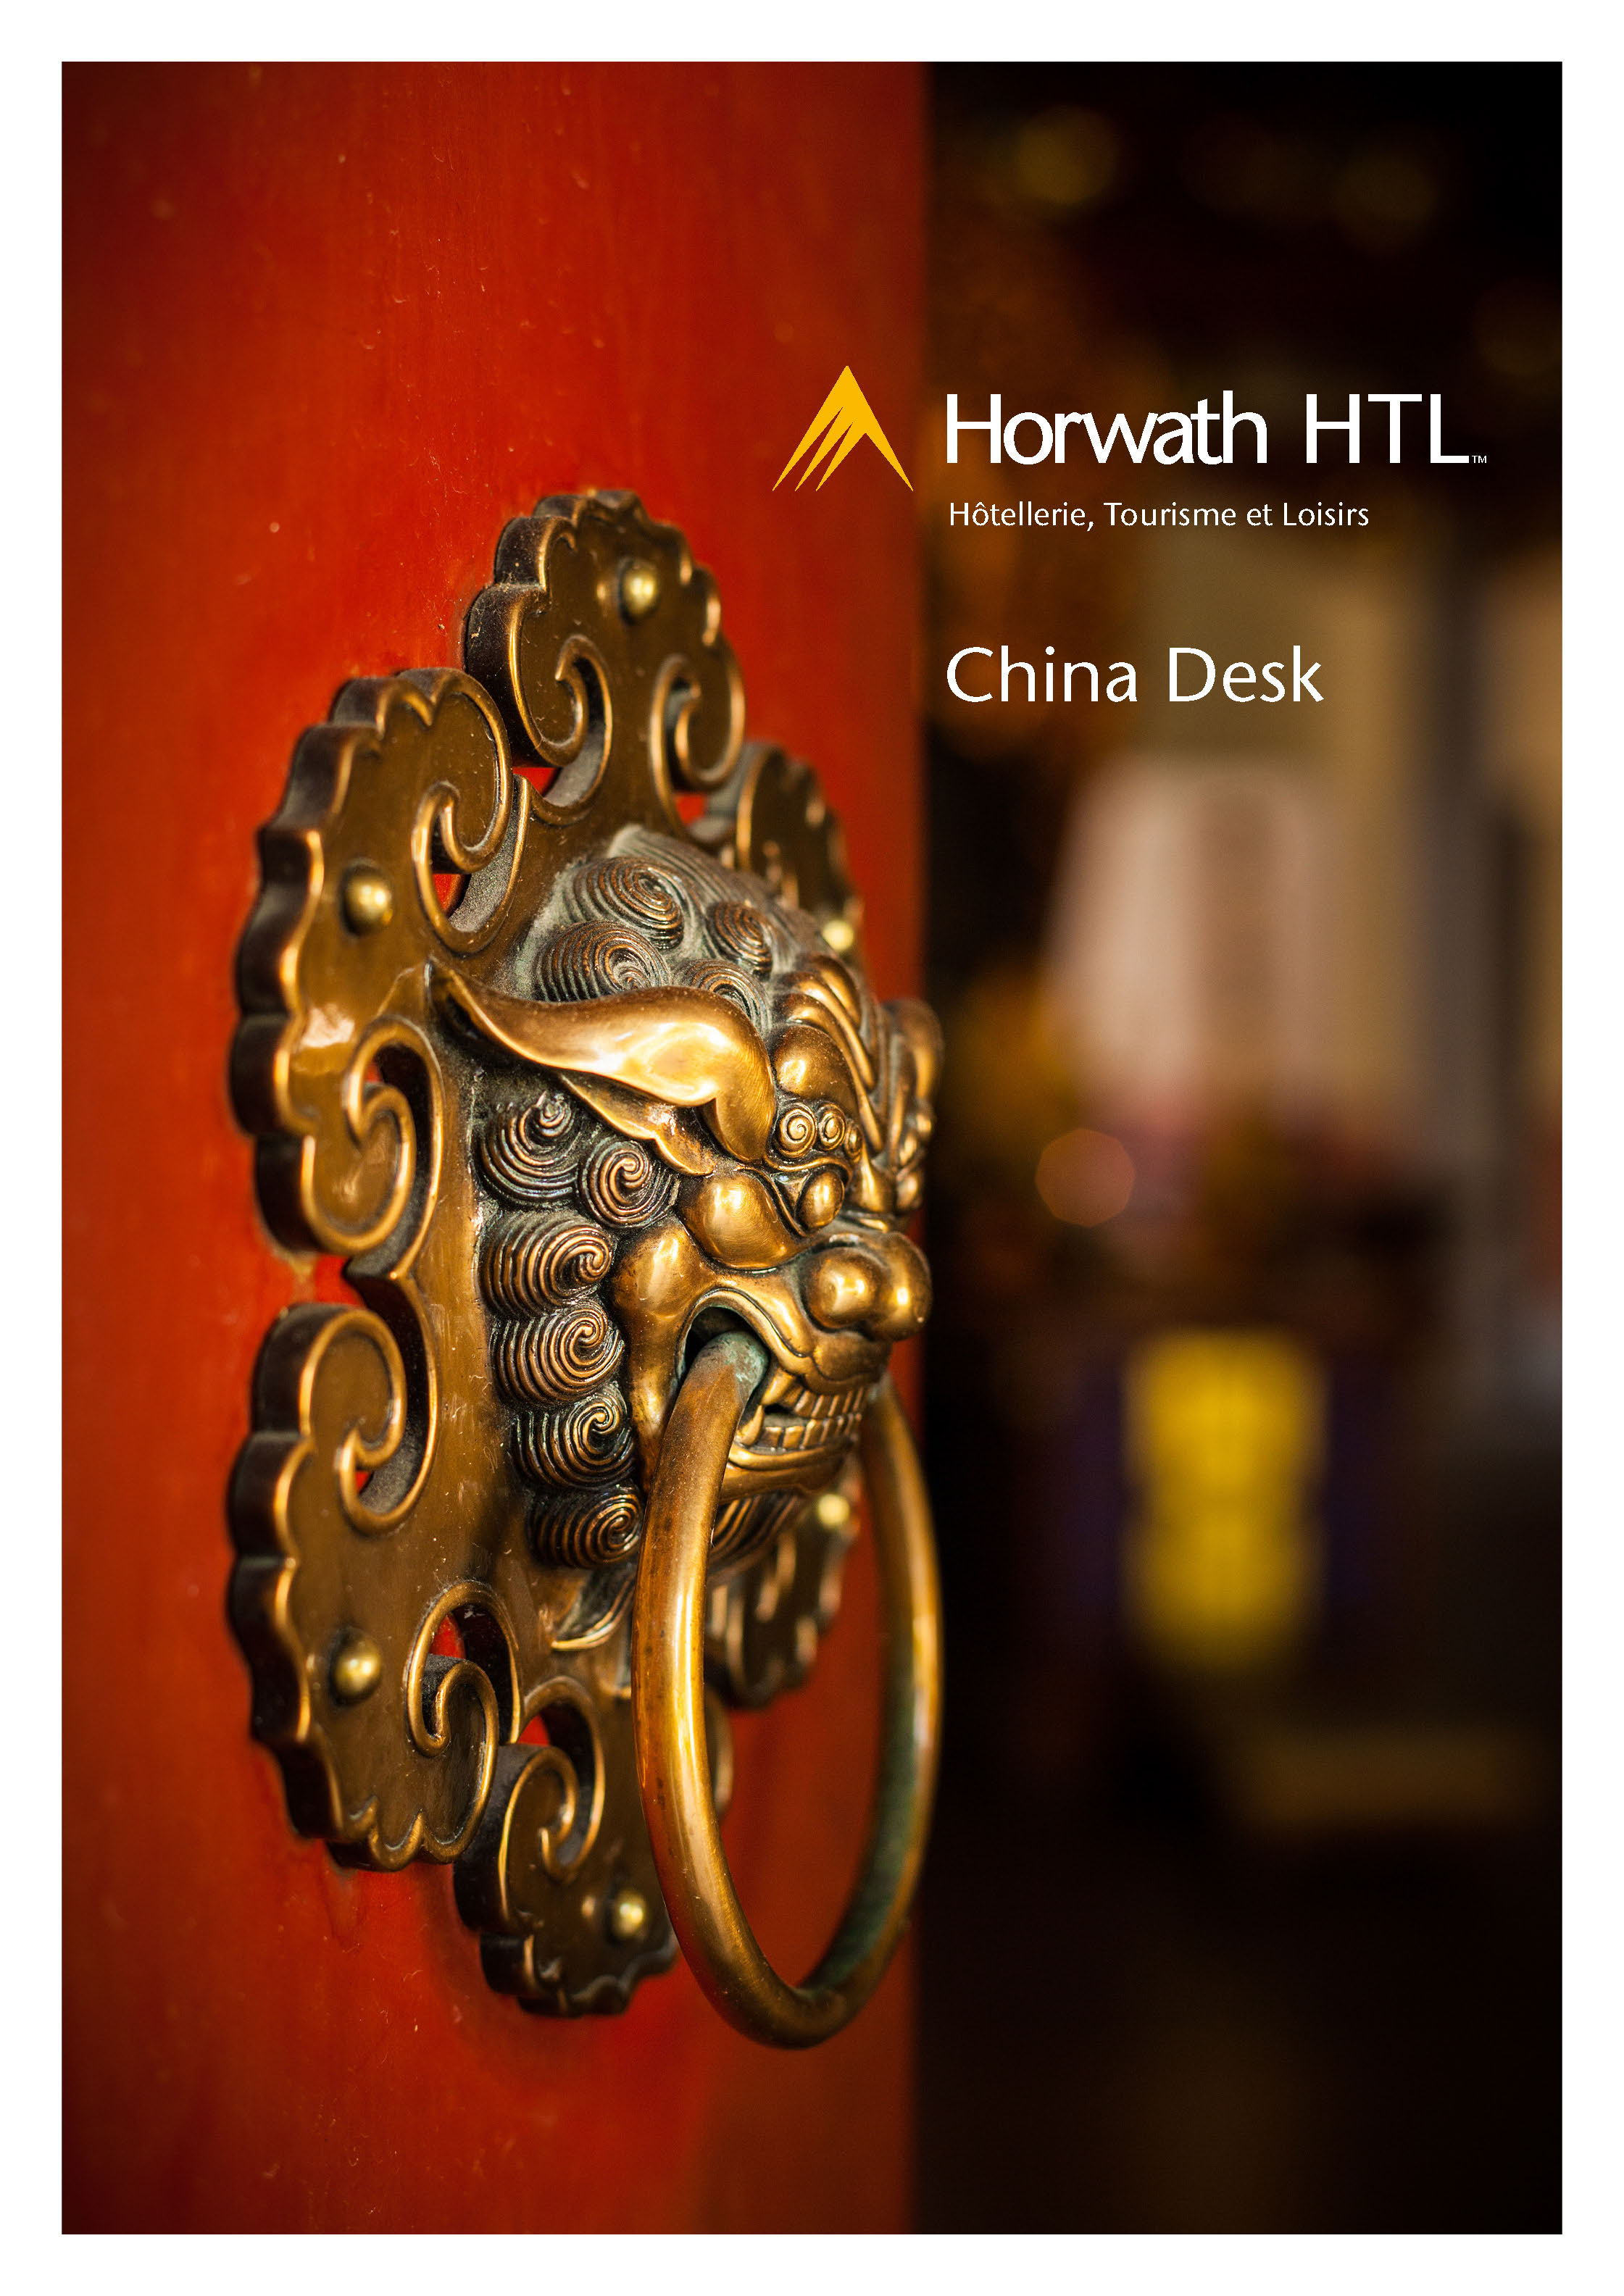 Horwath HTL: China Desk